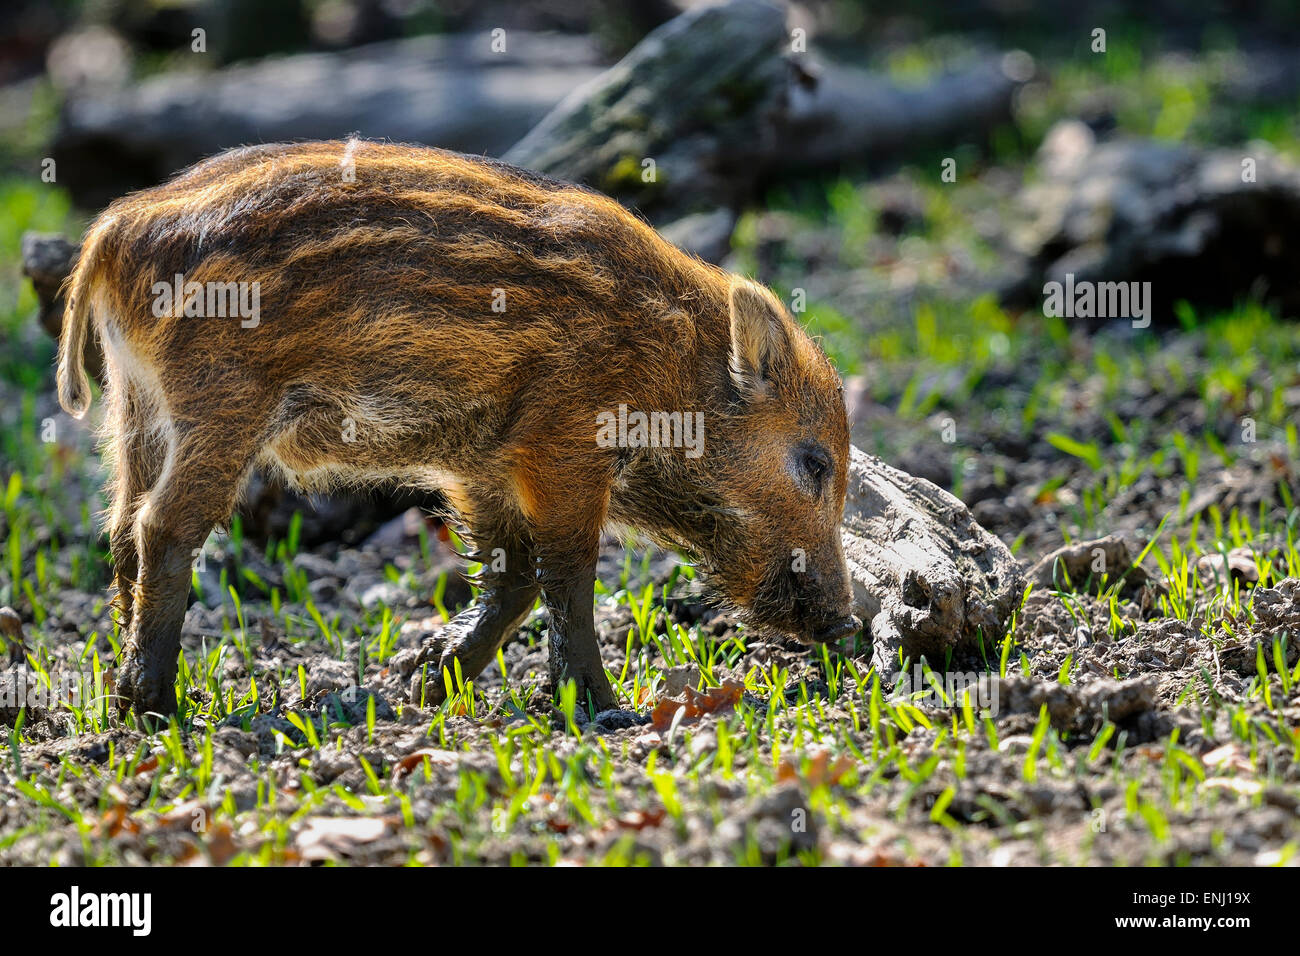 sus scrofa, wild boar Stock Photo